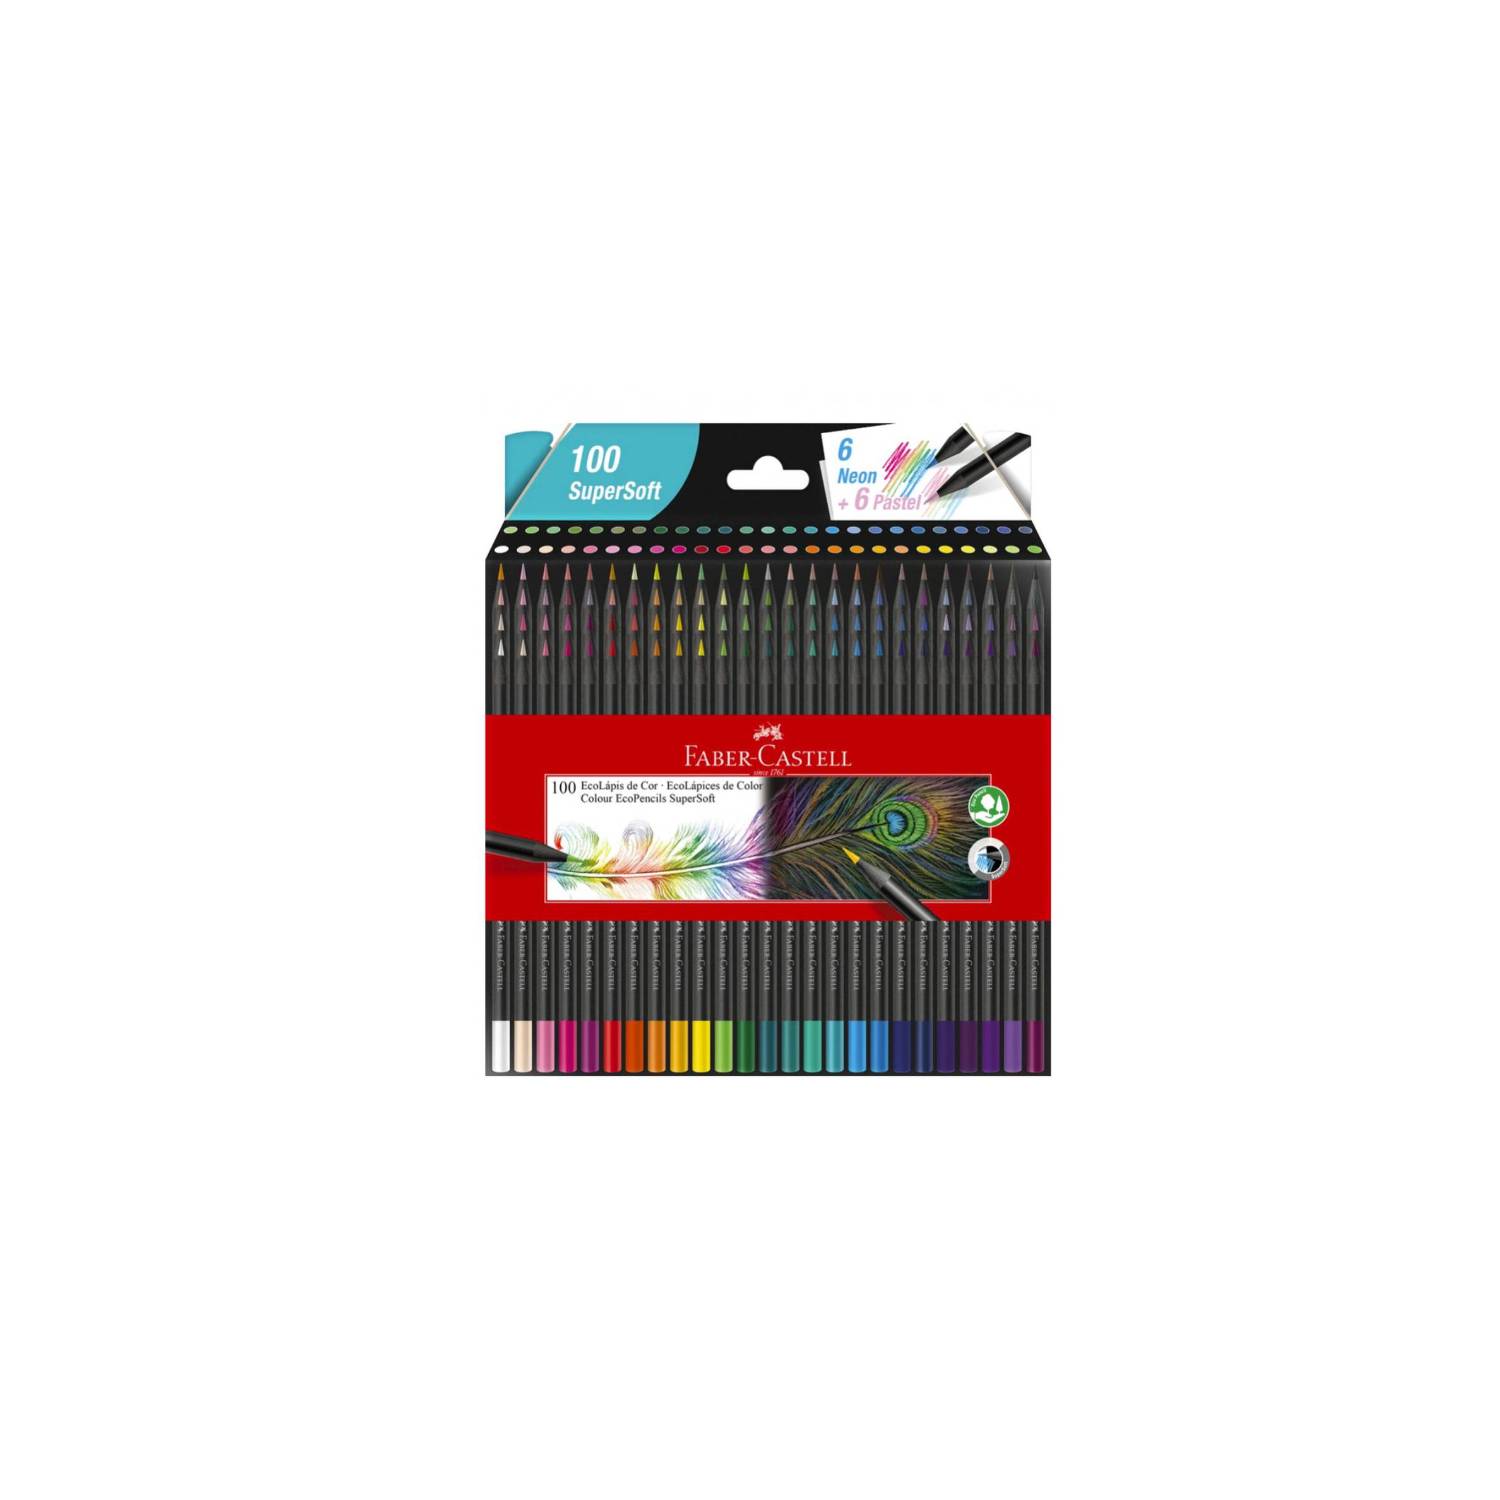 FABER-CASTELL Faber Castell Supersoft Set 100 Lápices Colores Ecolapices